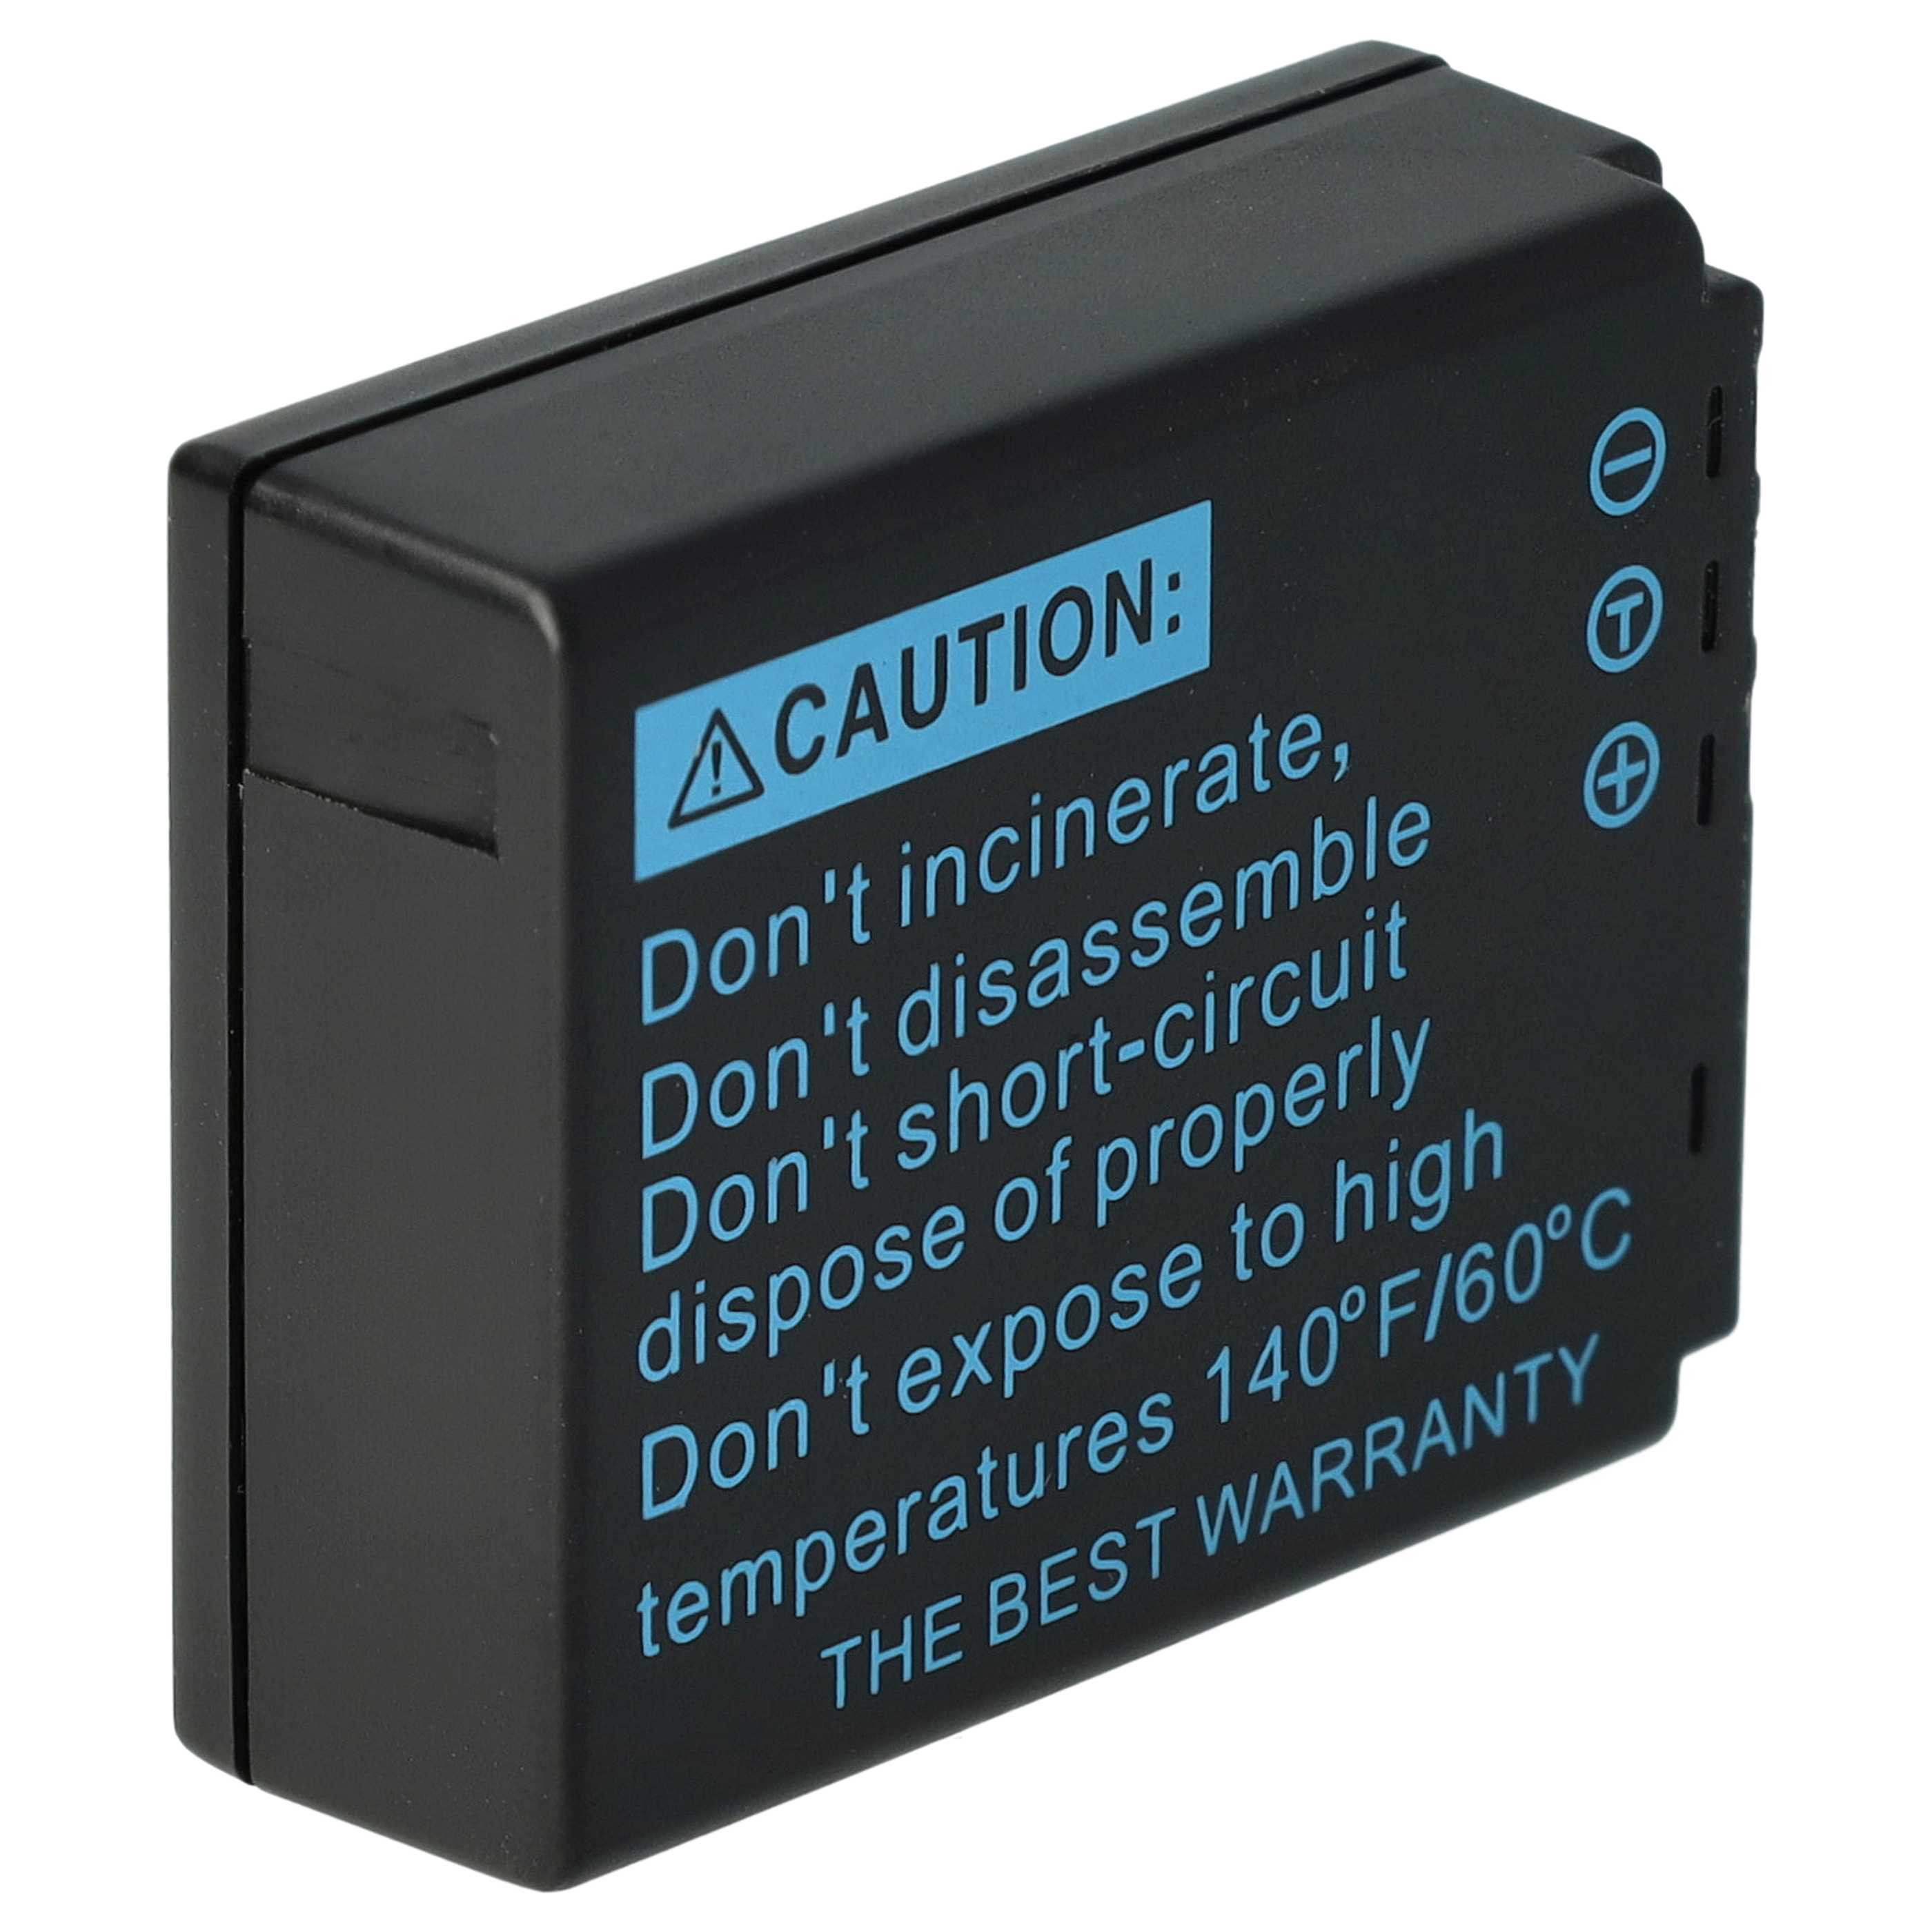 Akumulator do aparatu cyfrowego zamiennik Panasonic CGA-S007A/B, CGA-S007, CGA-S007A/1B - 650 mAh 3,6 V Li-Ion